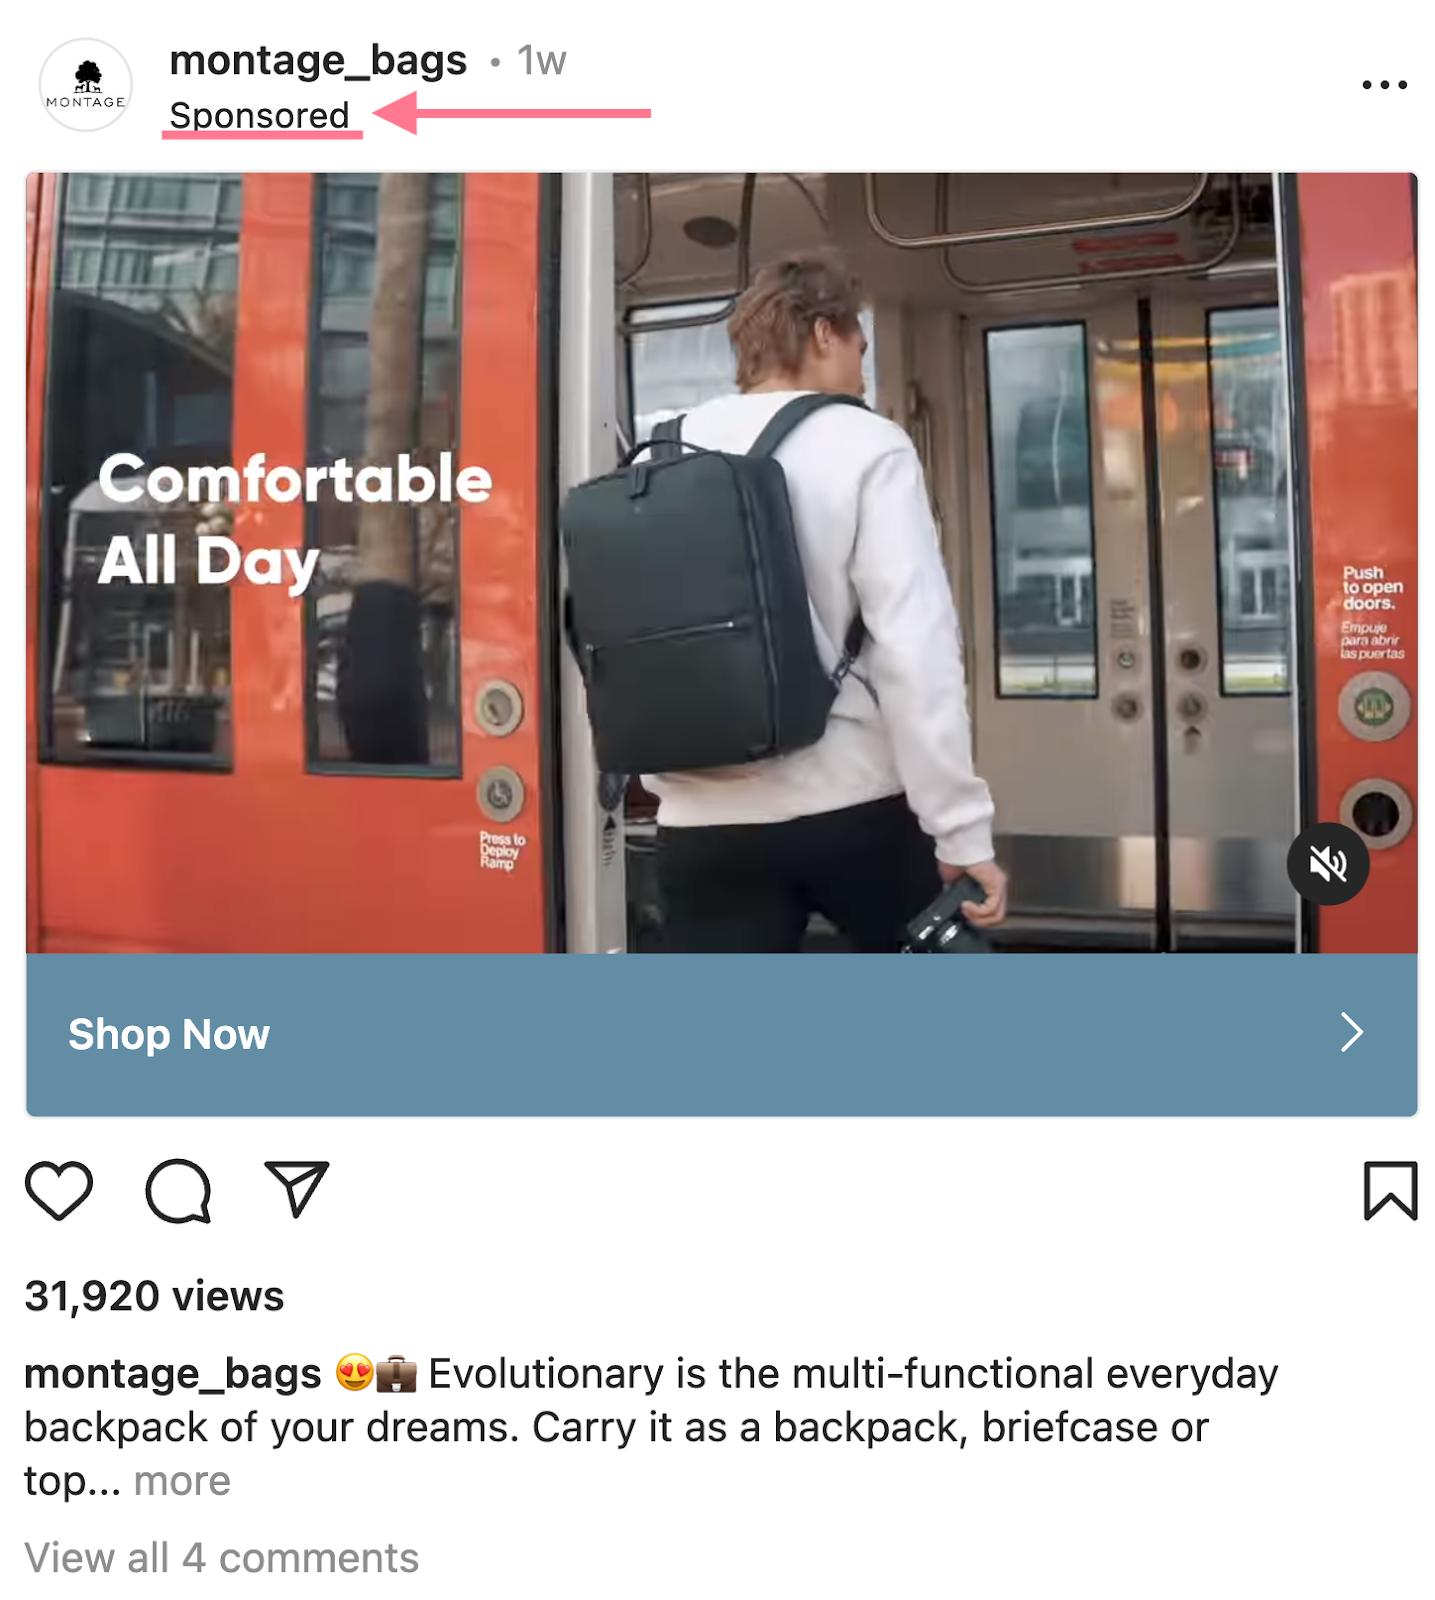 example of sponsored post on Instagram